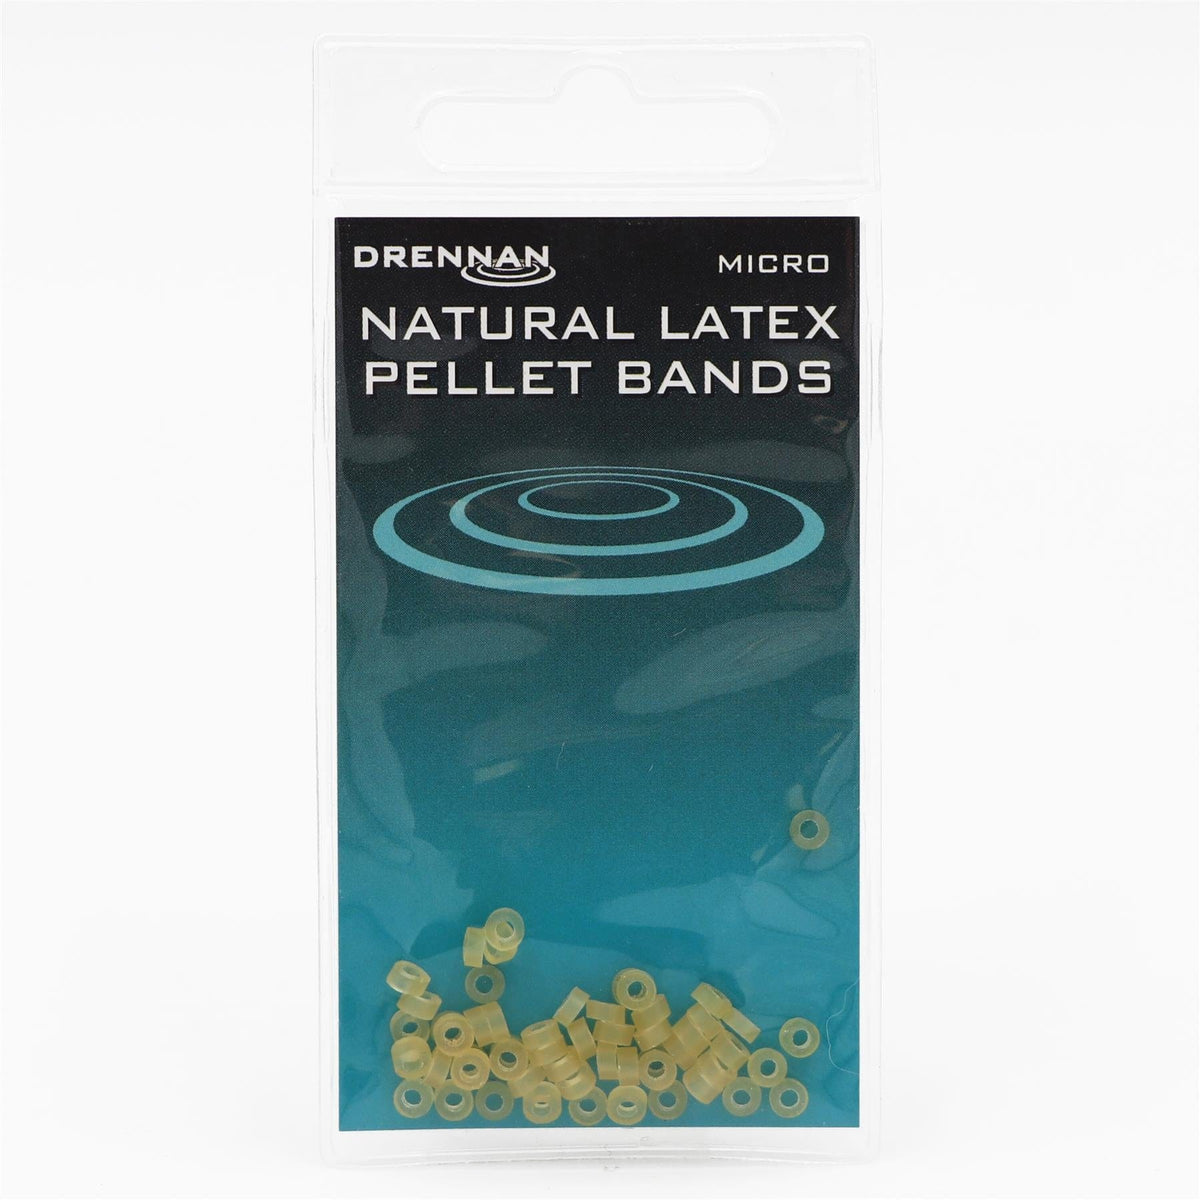 Drennan Natural Latex Pellet Bands.